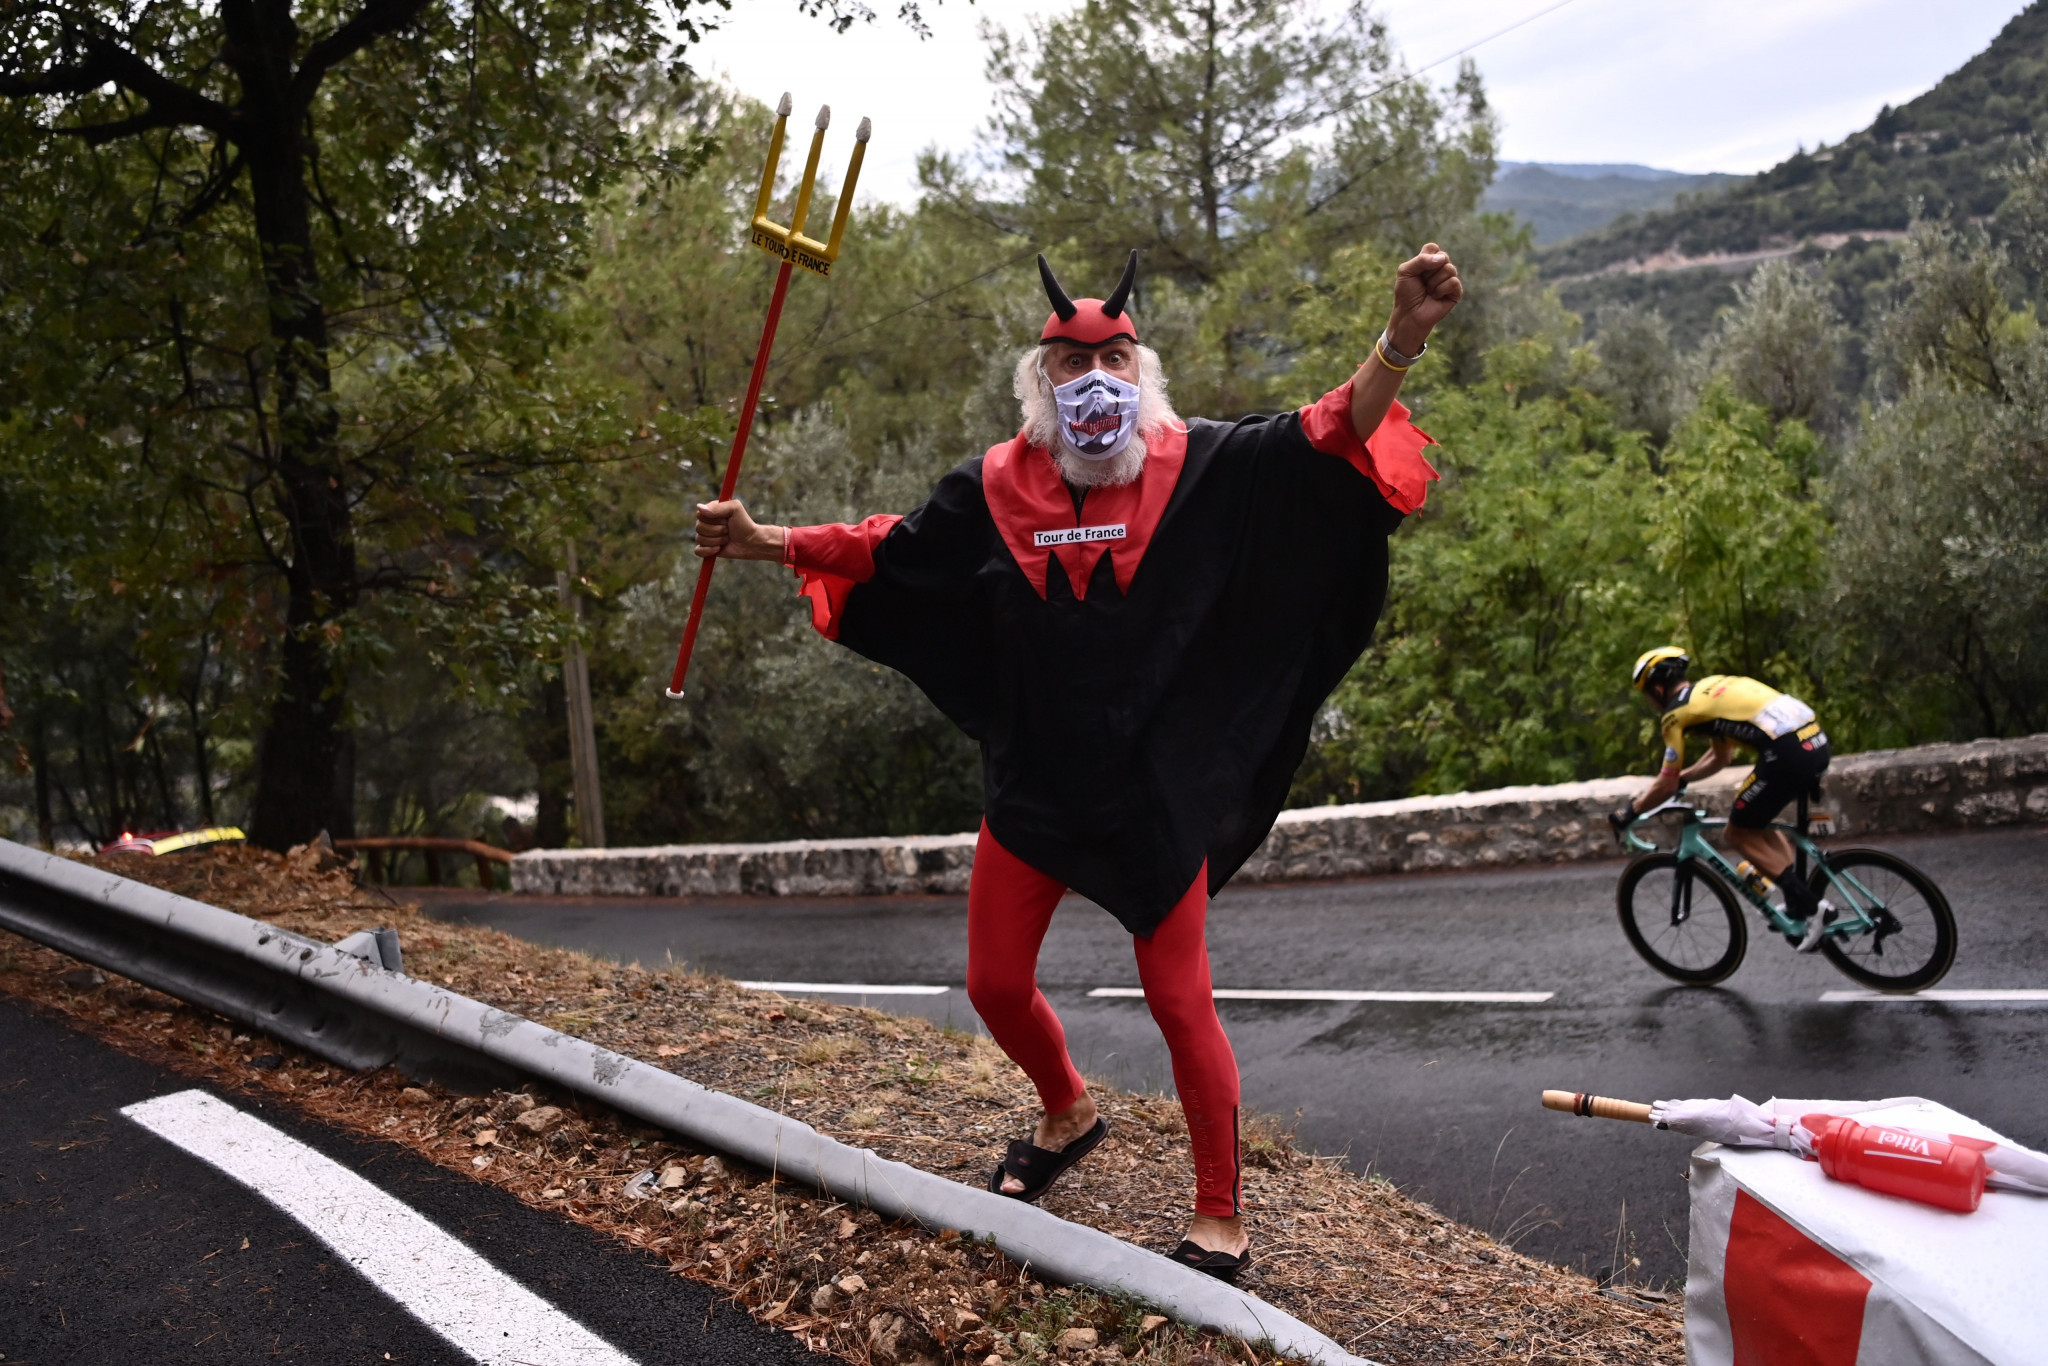 German Tour de France fan Didi the Devil was among spectators pictured on the route ©Getty Images